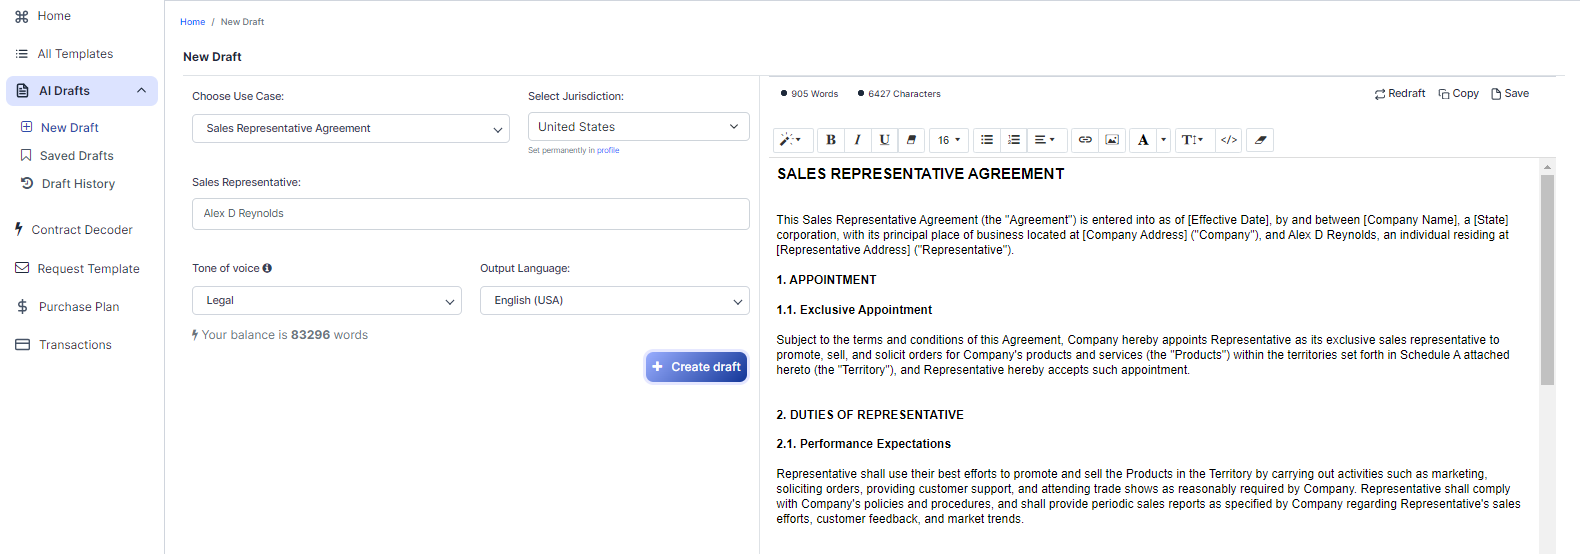 Sales Representative Agreement template